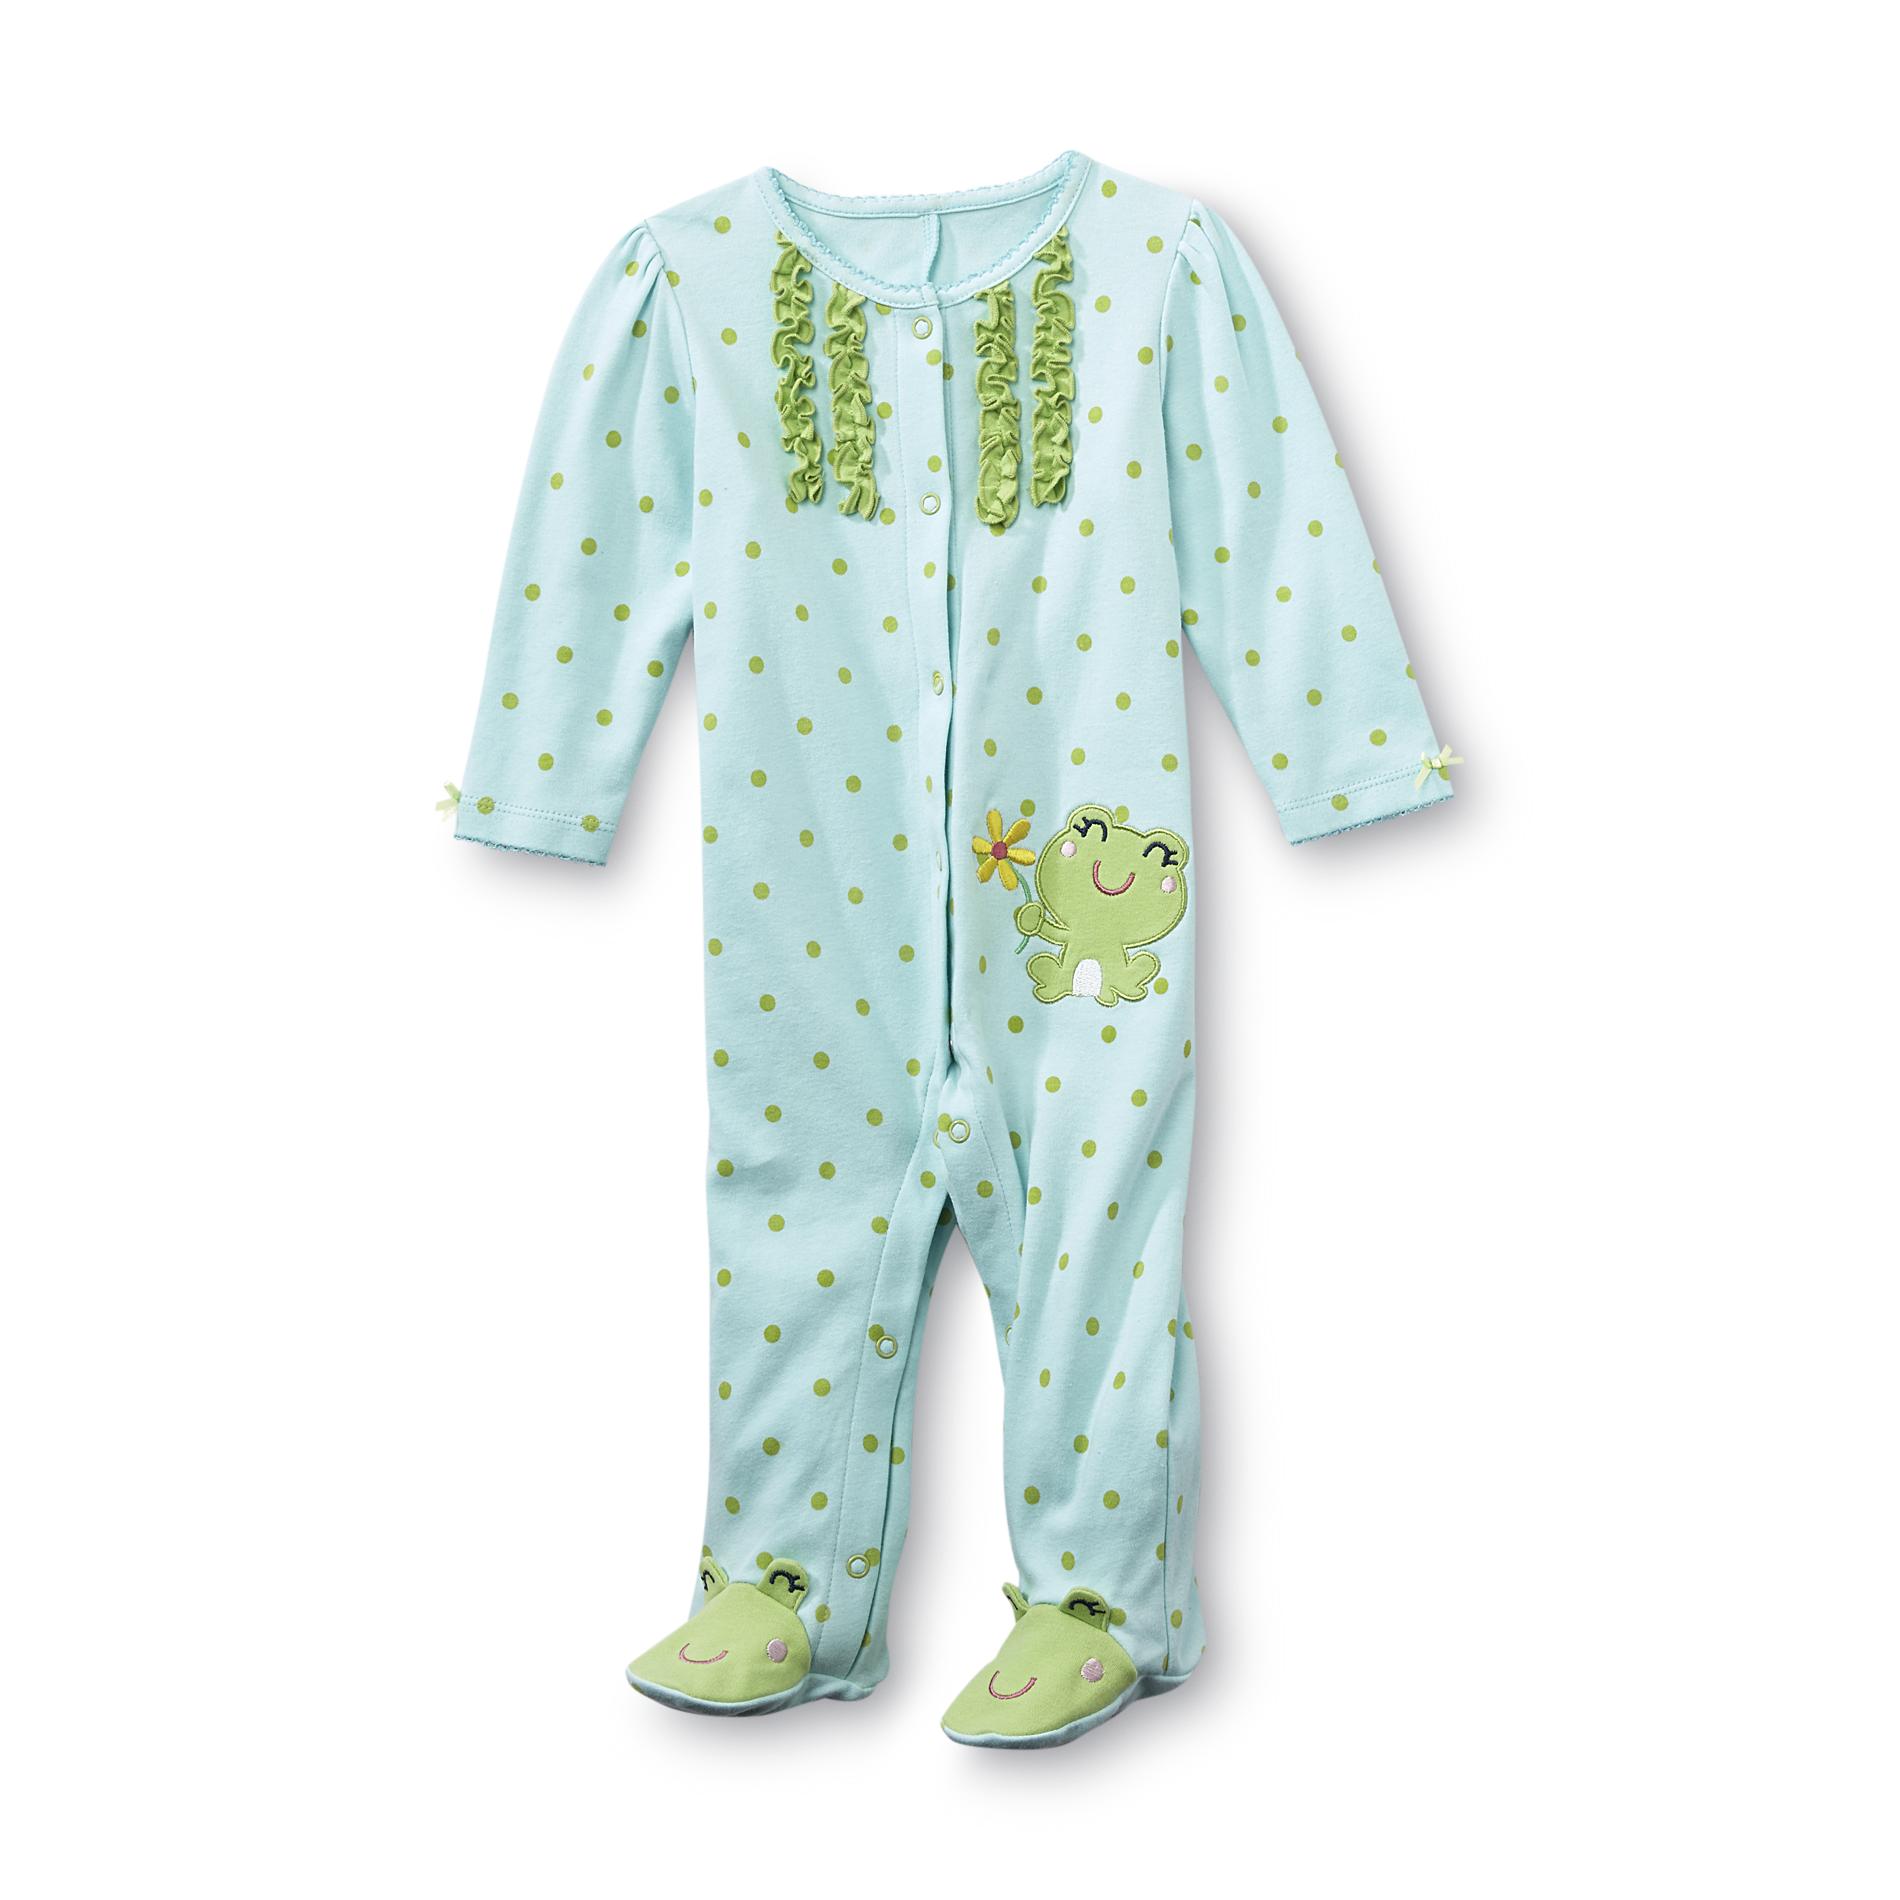 Little Wonders Newborn Girl's Footie Pajamas - Frog